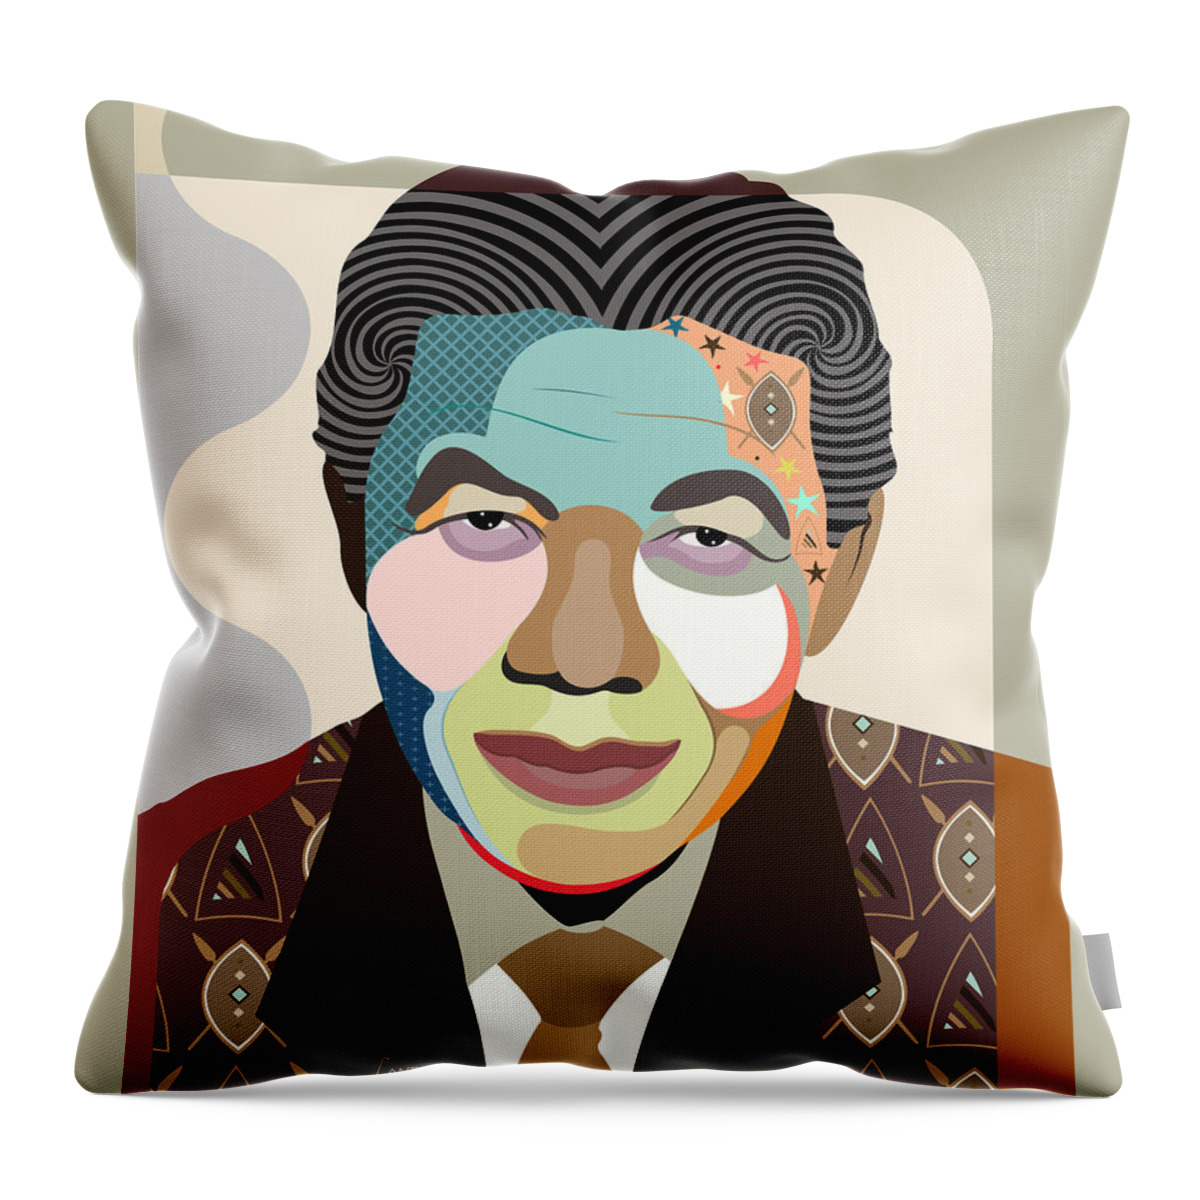 Nelson Mandela Throw Pillow featuring the digital art Madiba by Lanre Studio